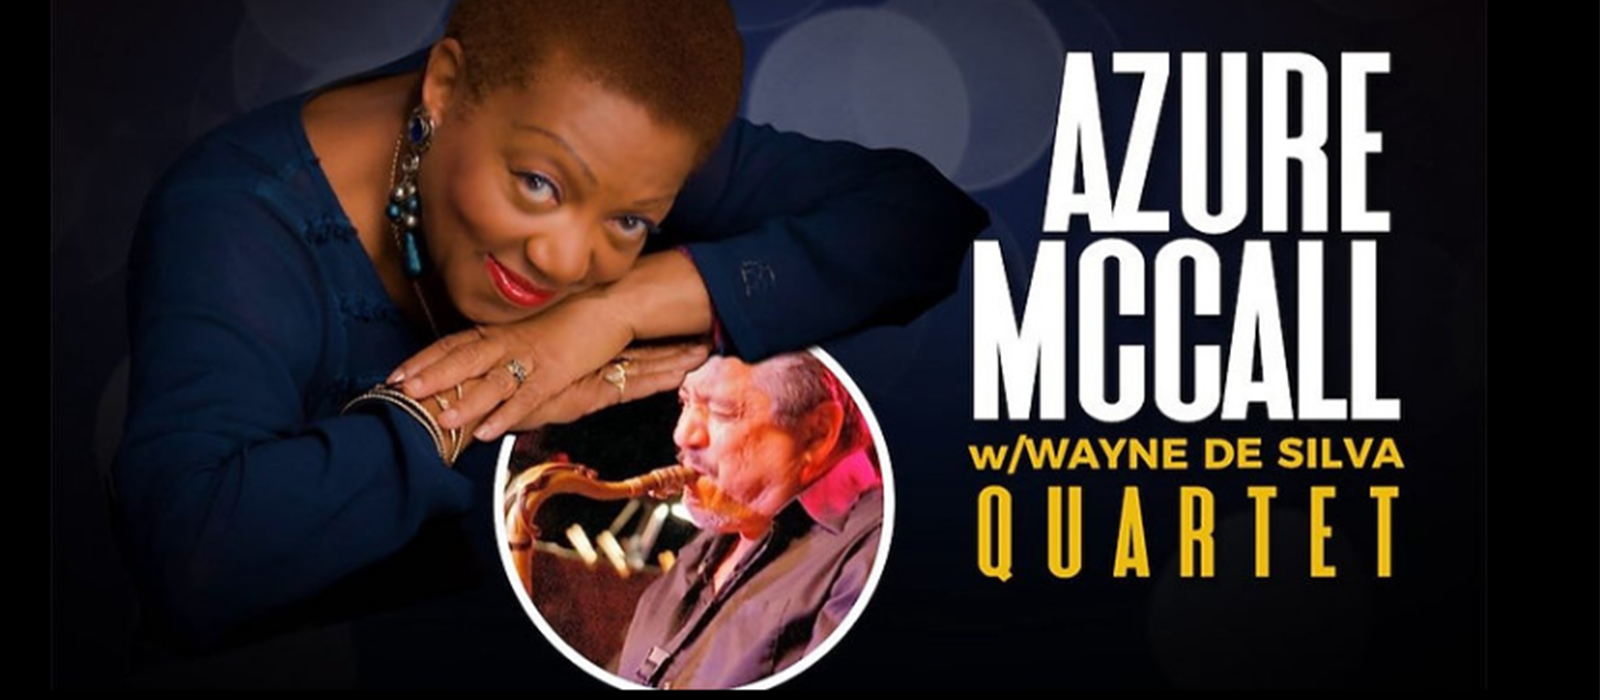 Azure McCall & the Wayne de Silva Quartet